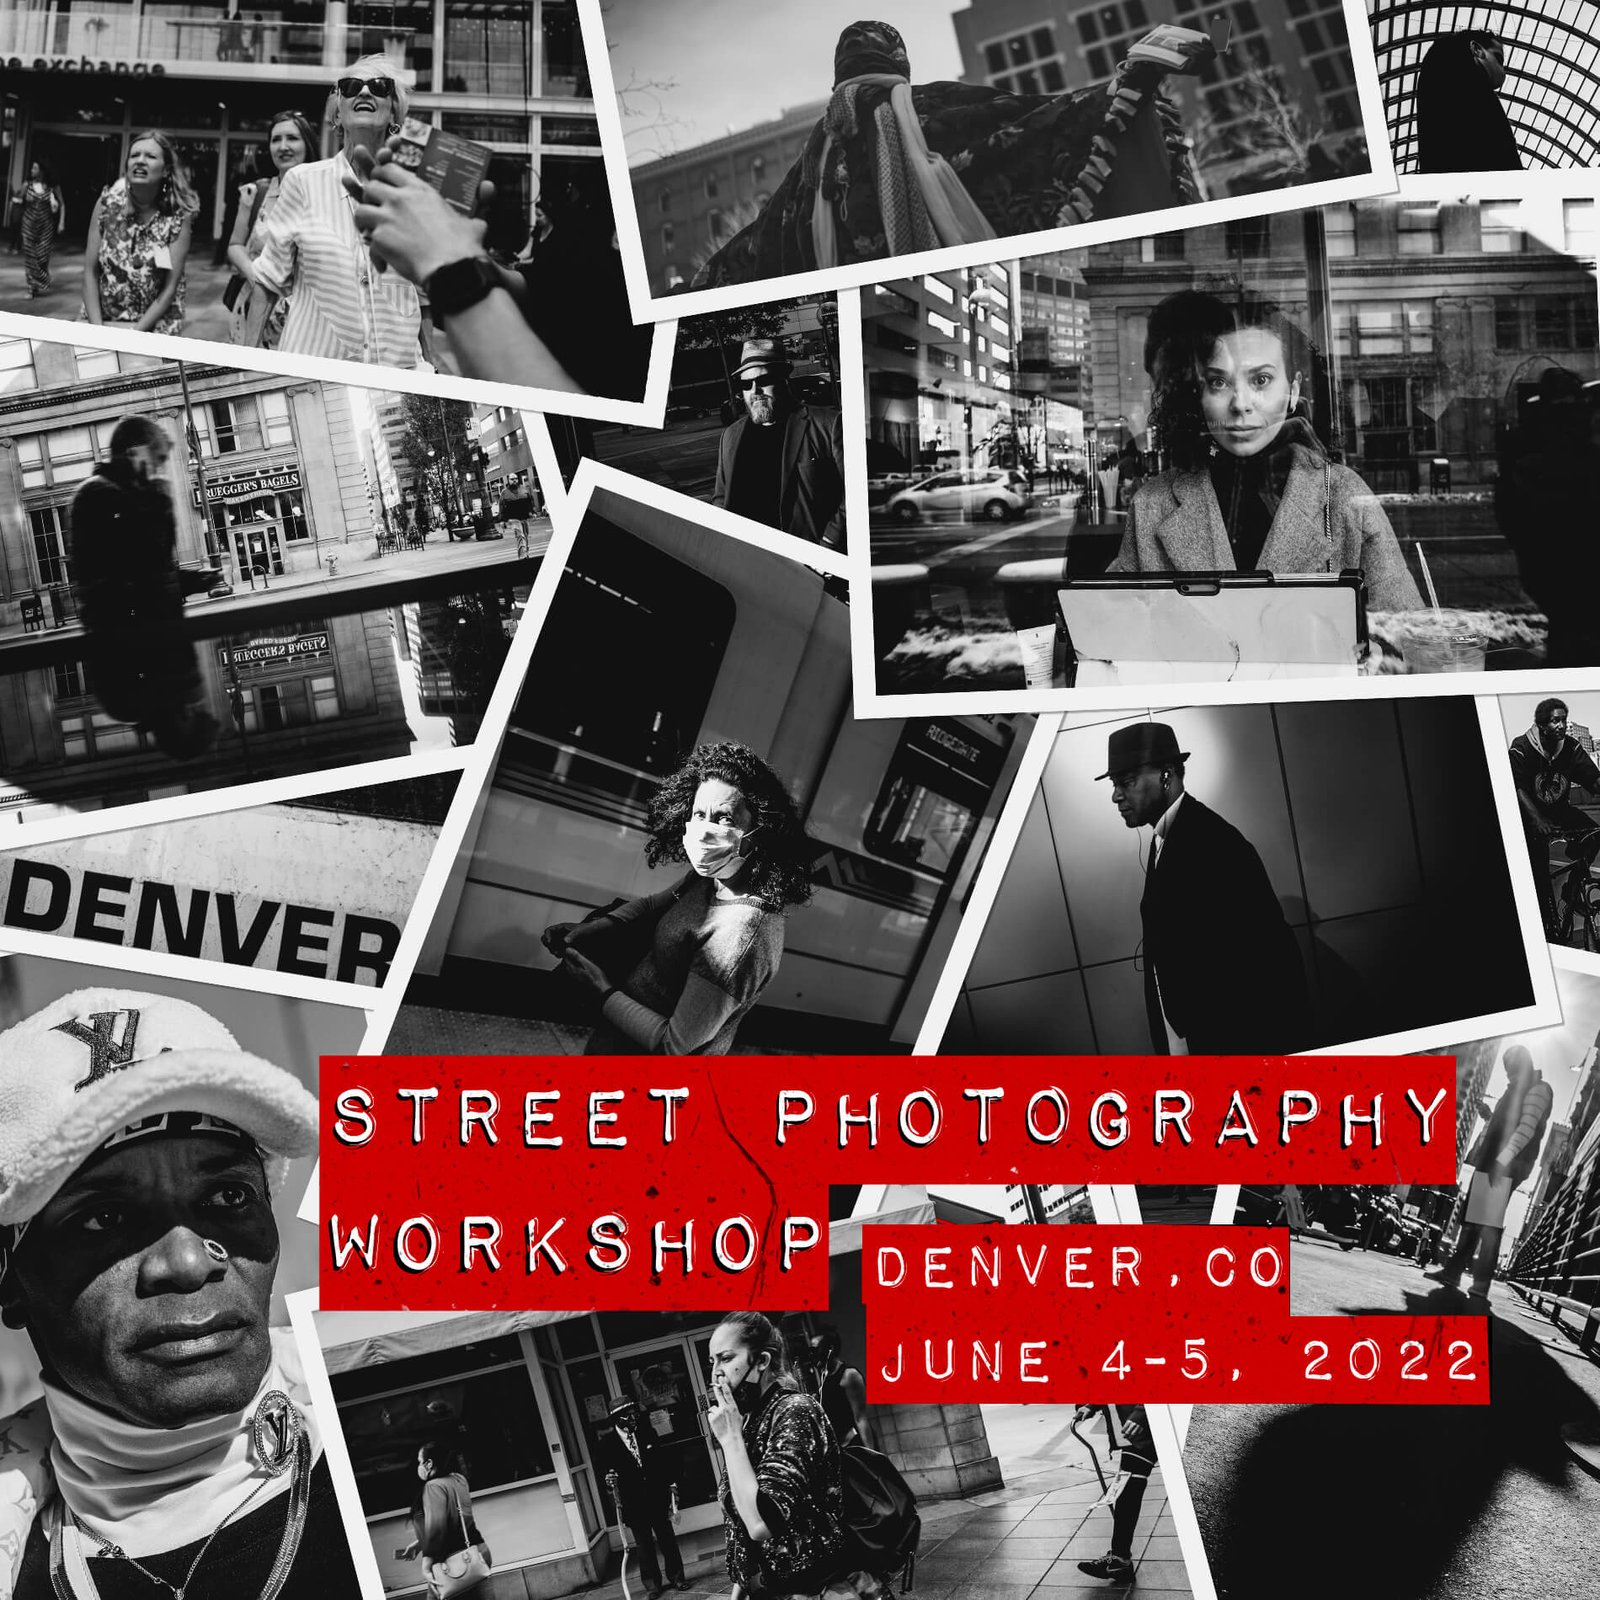 Street Photography Workshop June 4-5, 2022